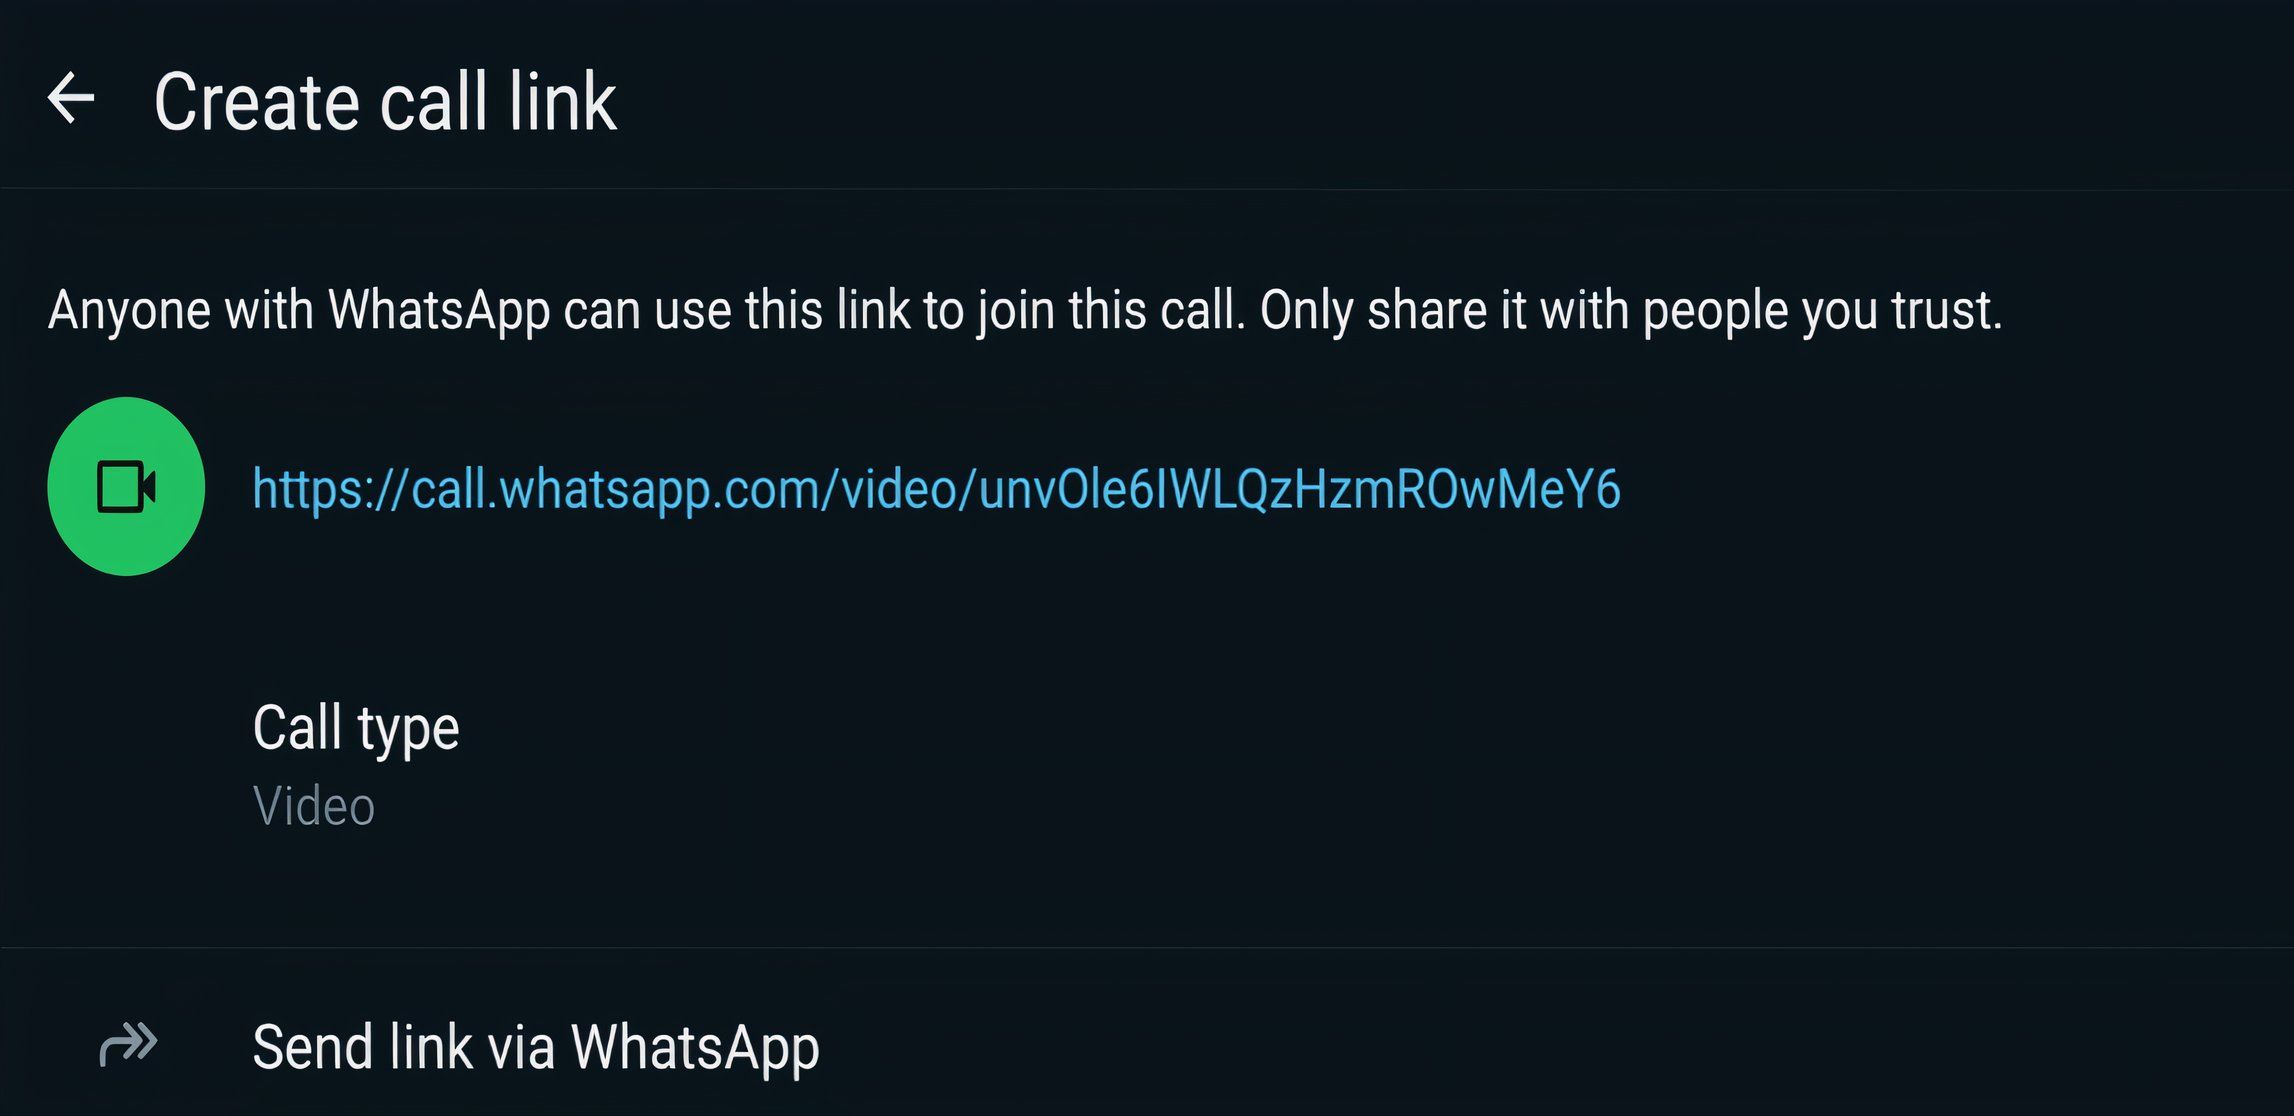 A screenshot of a Whatsapp call links generated call link